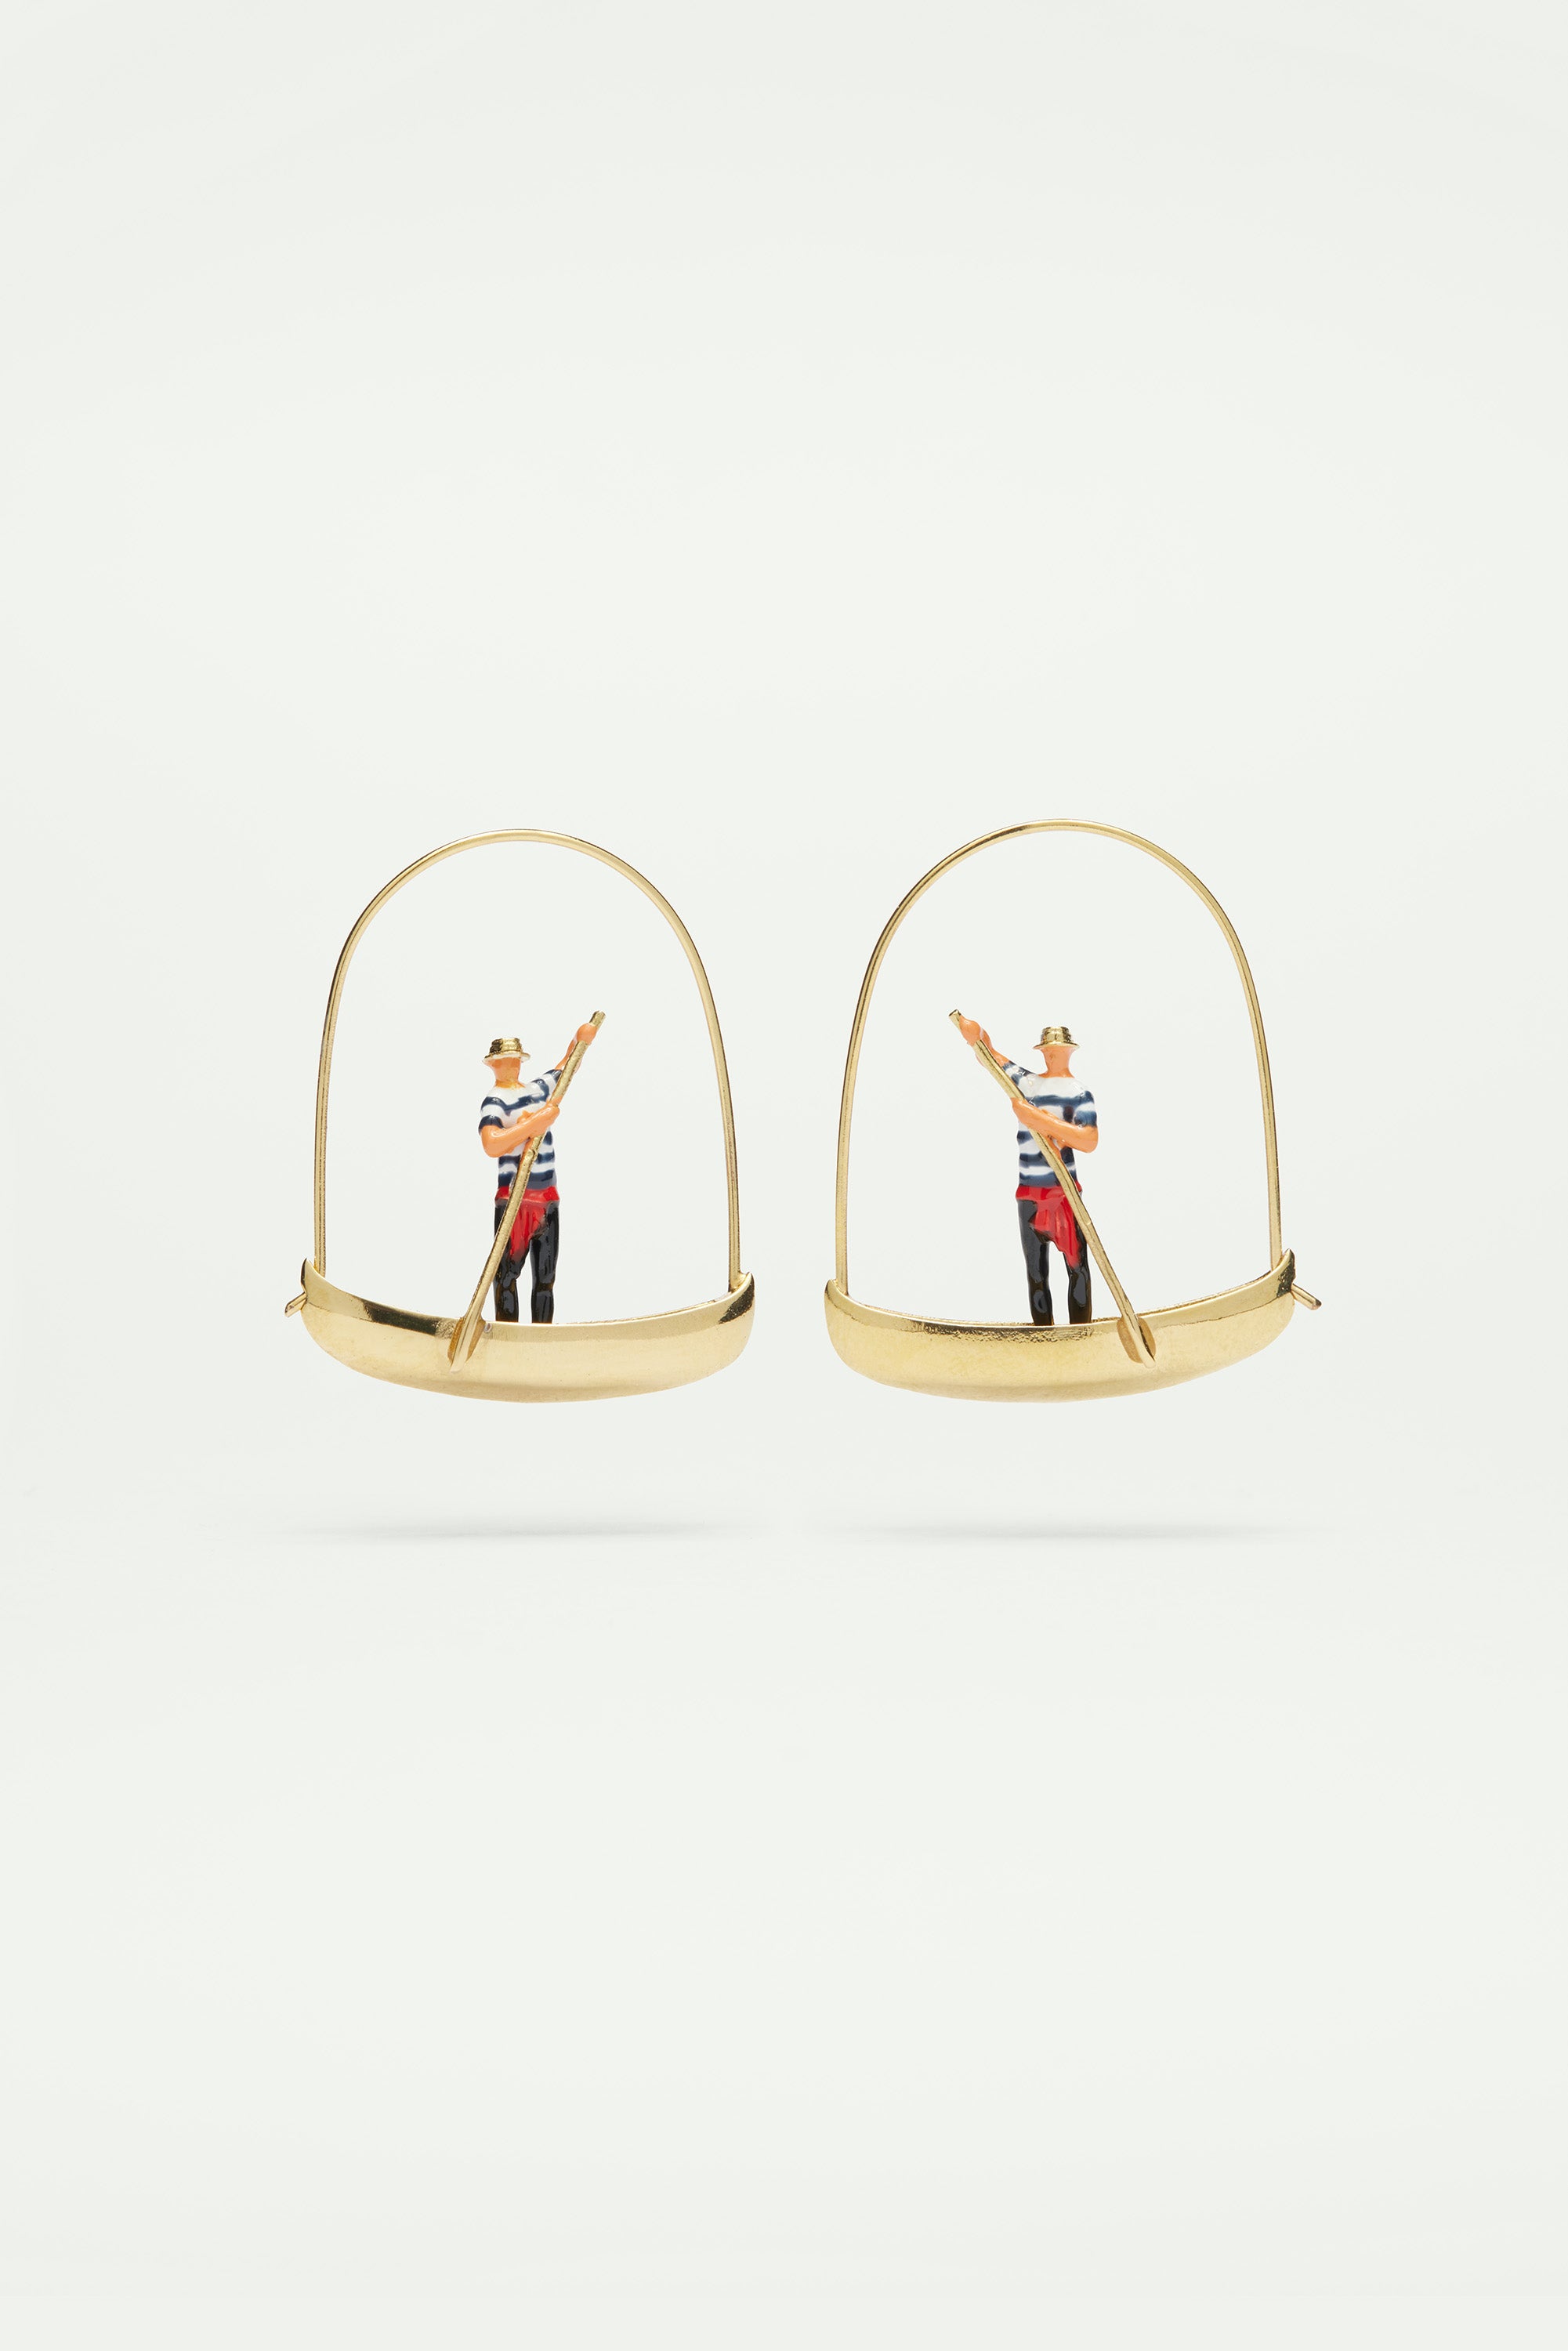 Boatman and gondola post earrings